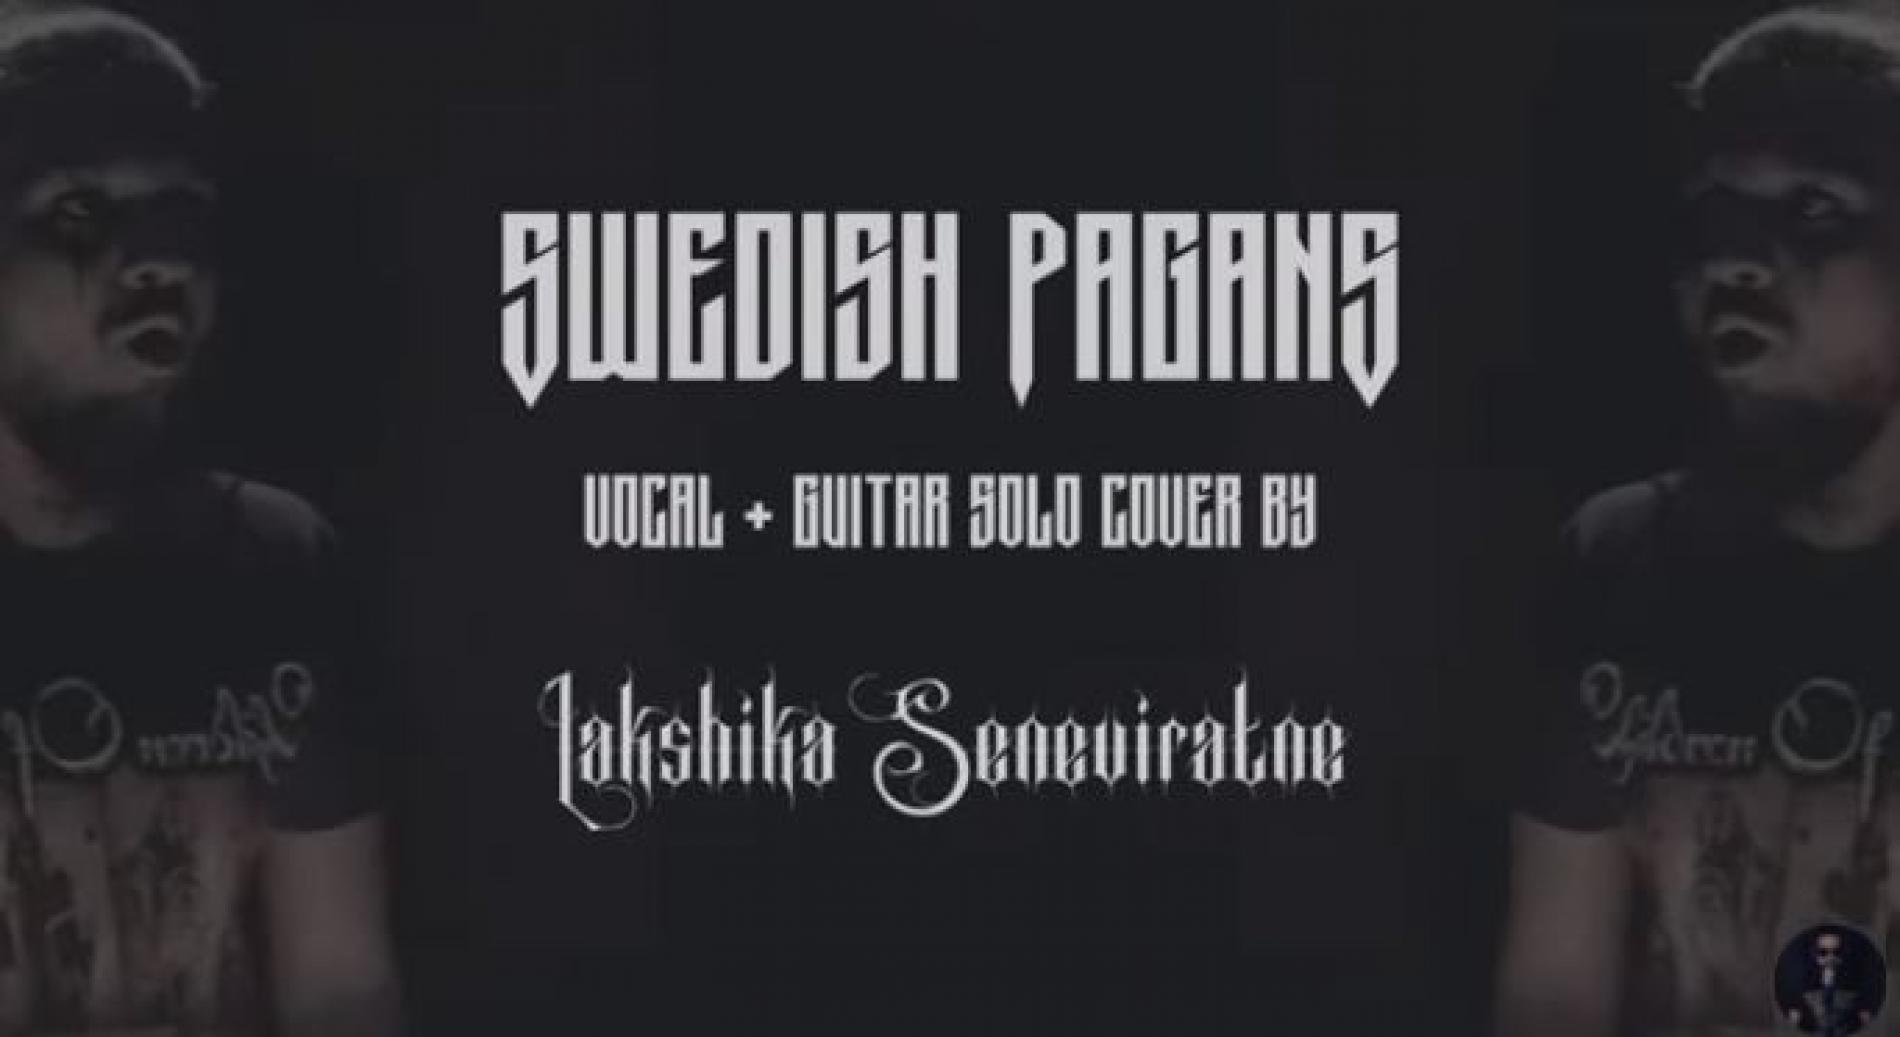 New Music : Swedish Pagans (Sabaton) – Cover By Lakshika Seneviratne